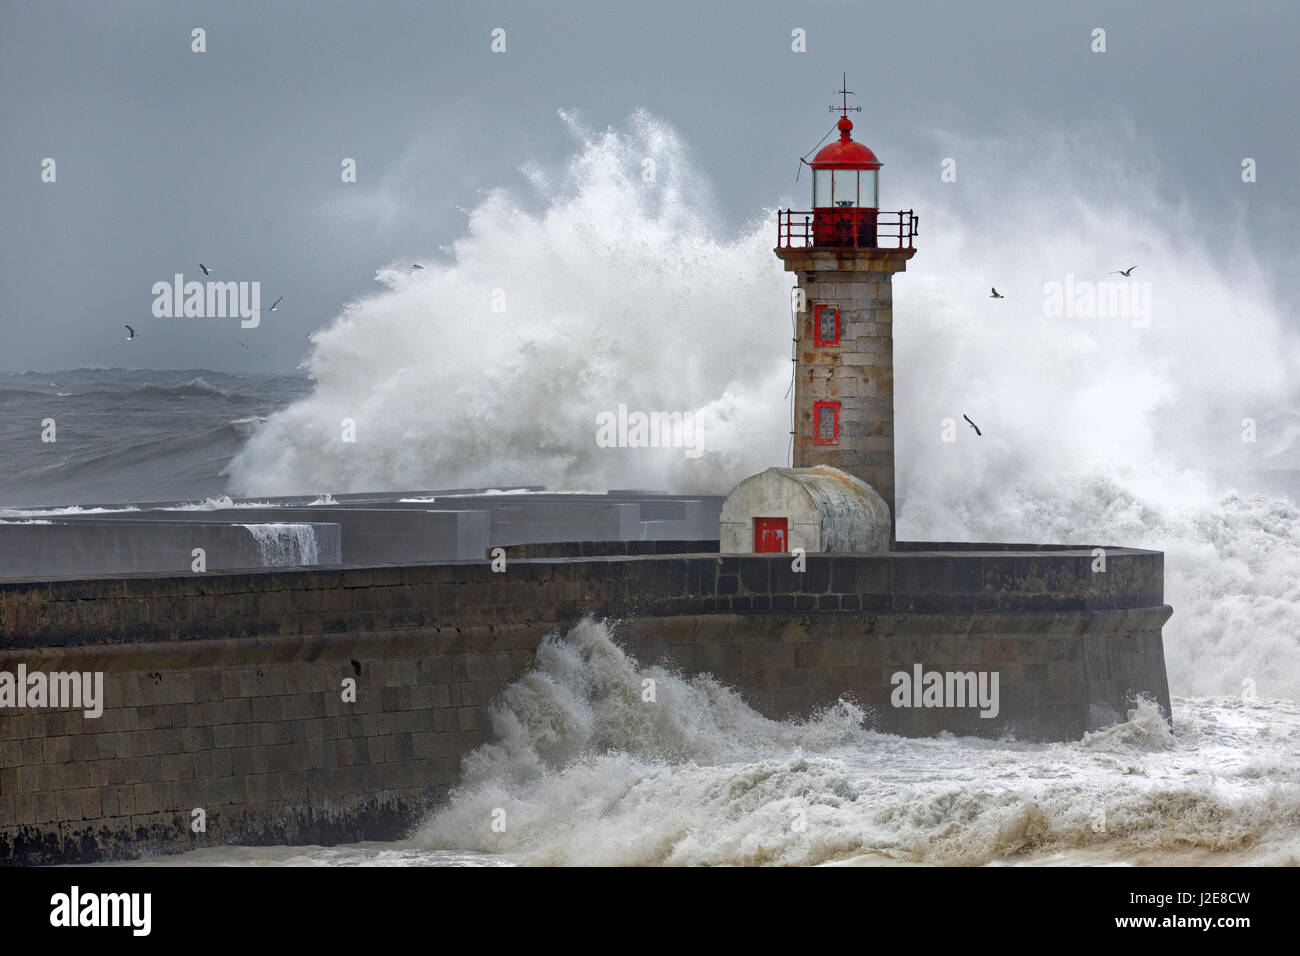 High waves, splashing spray, lighthouse during storm, Porto, Portugal Stock Photo